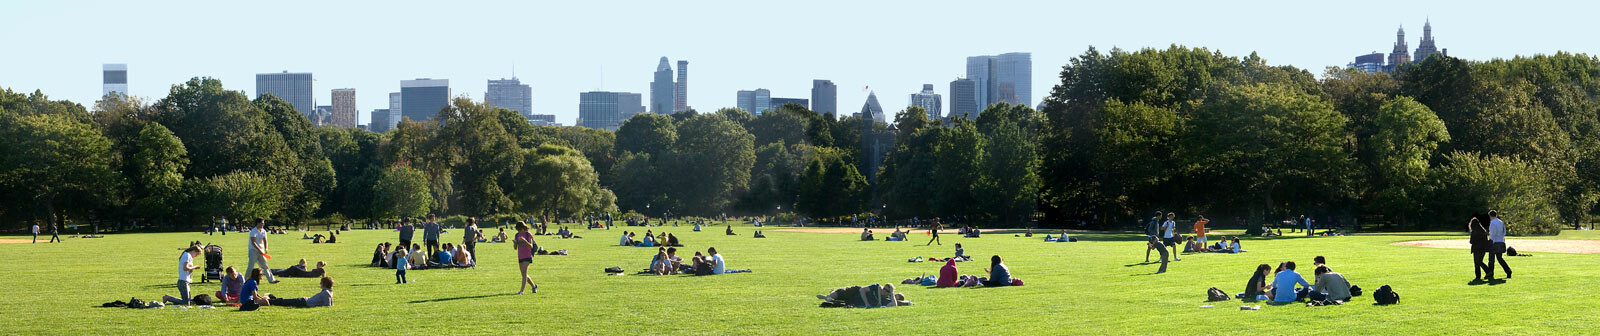 Central Park #2, New York, USA - Larry Yust